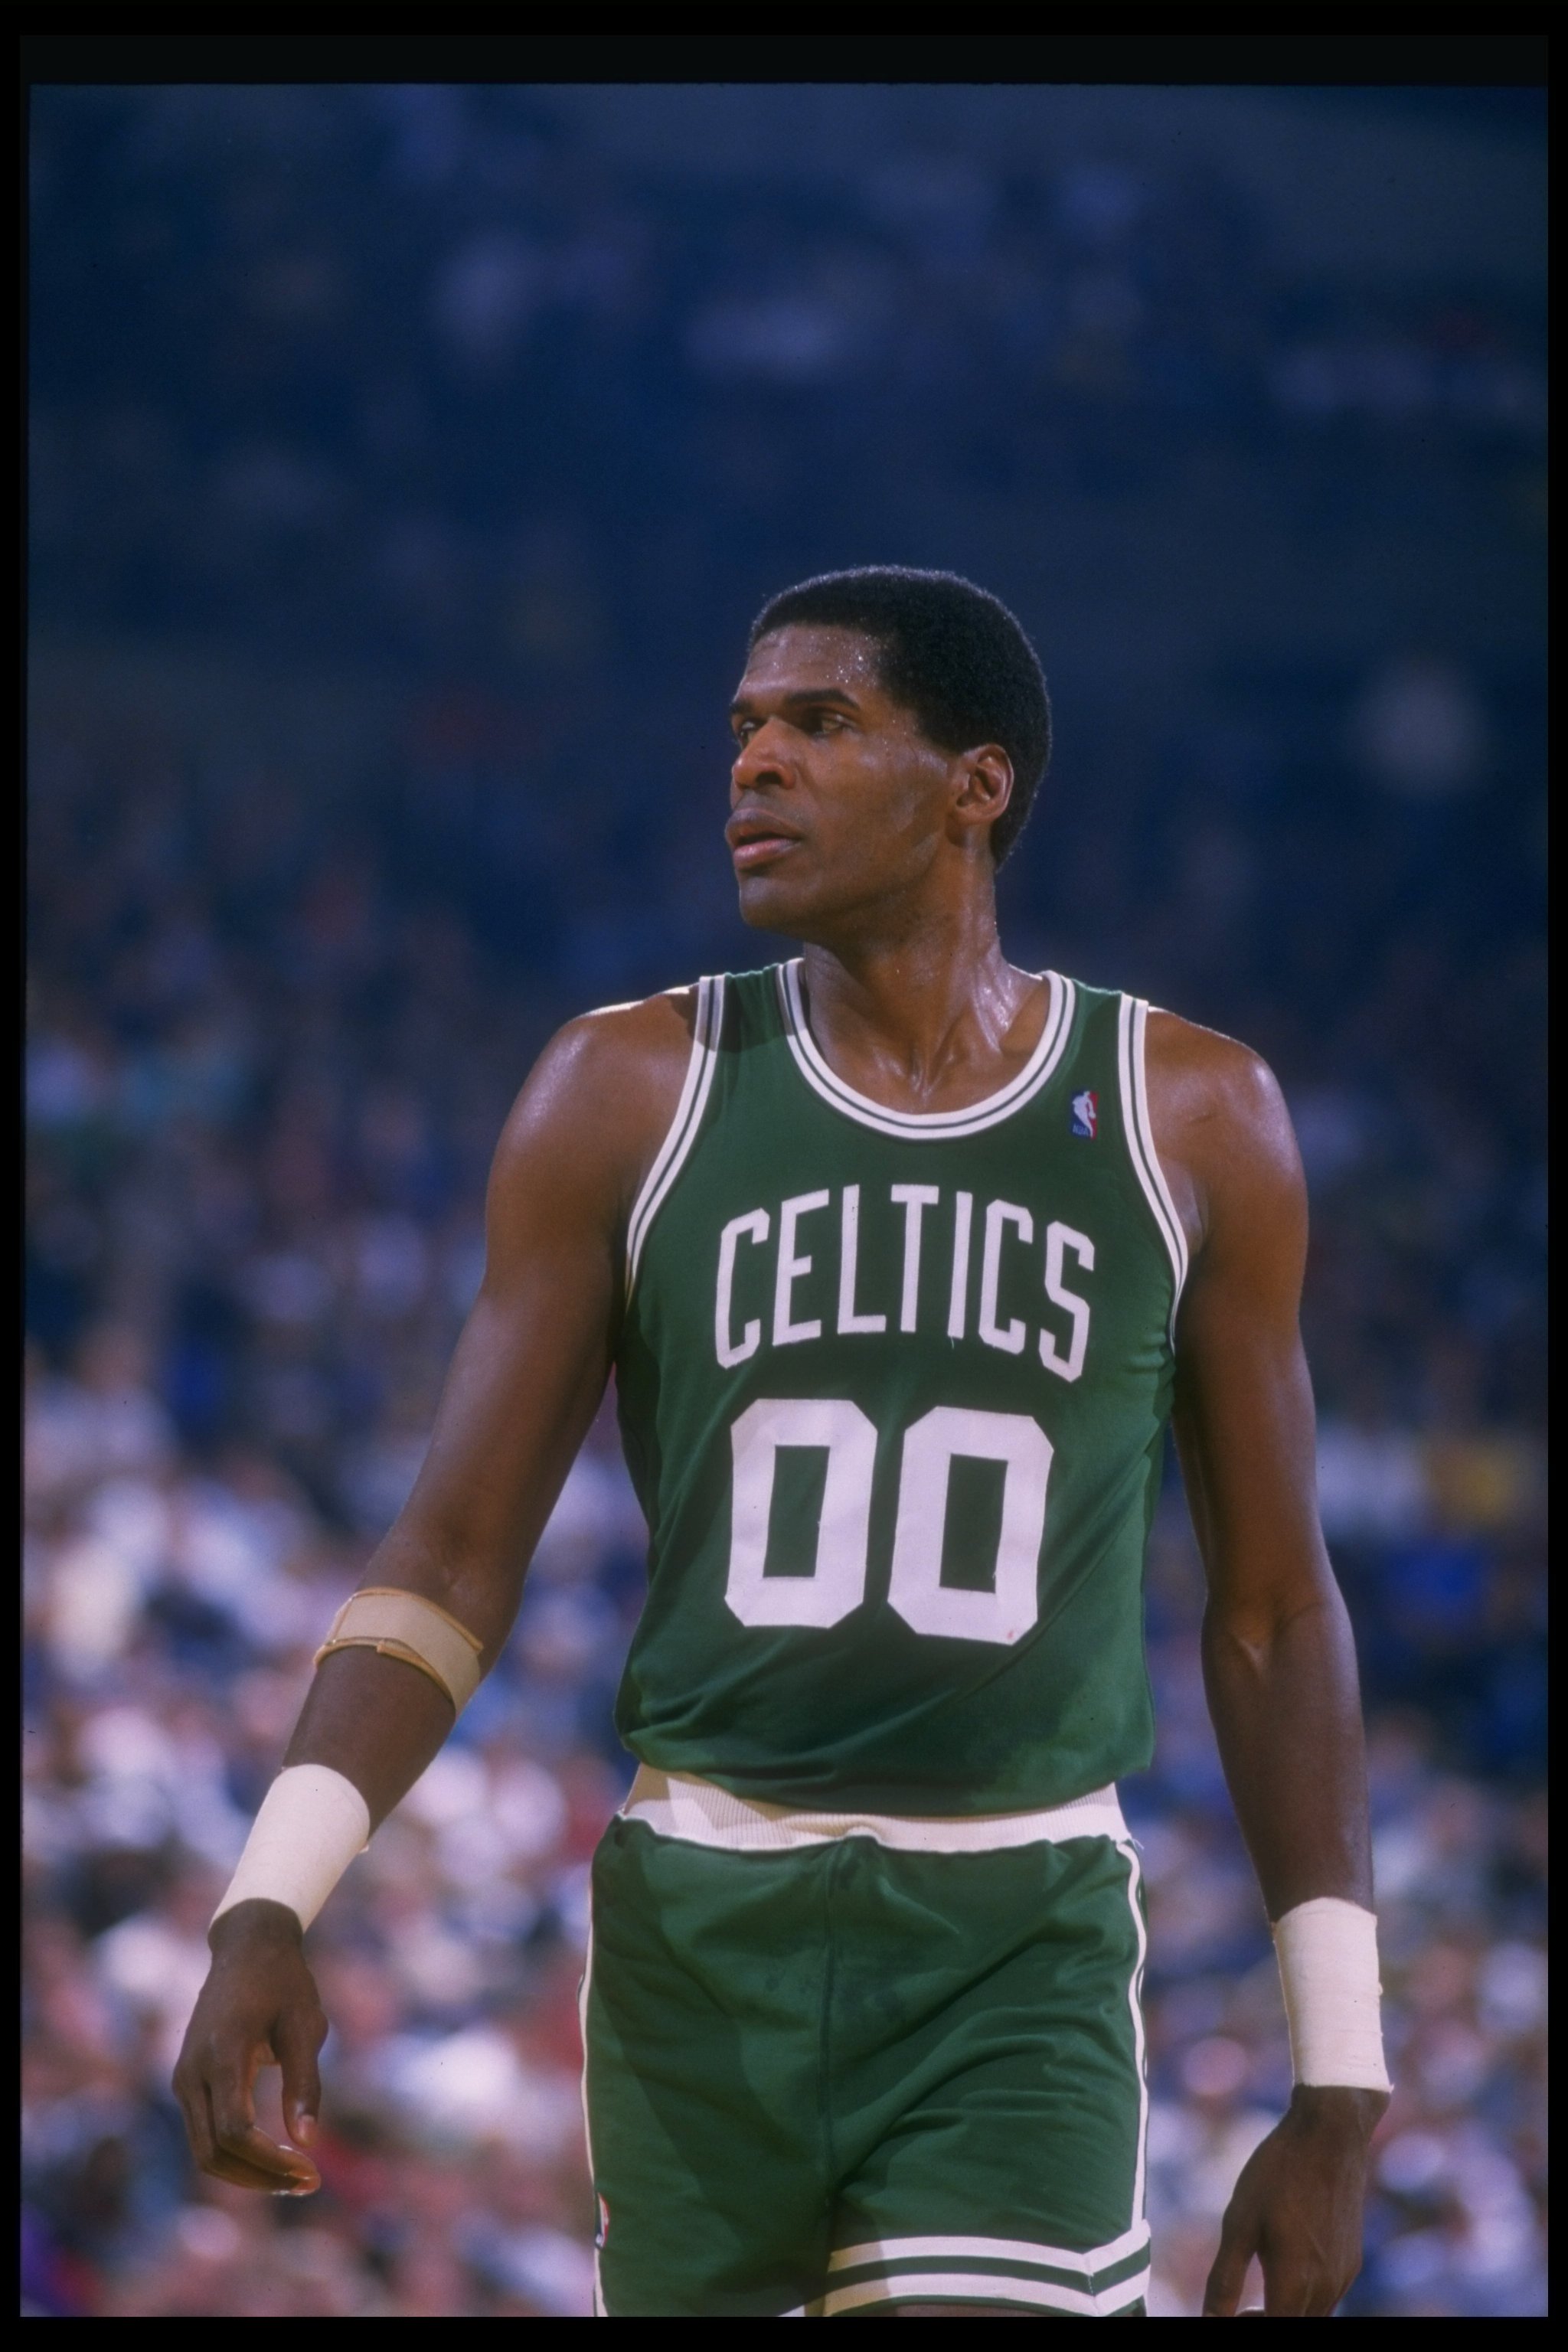 Robert Parish of the Boston Celtics looks on during a game.